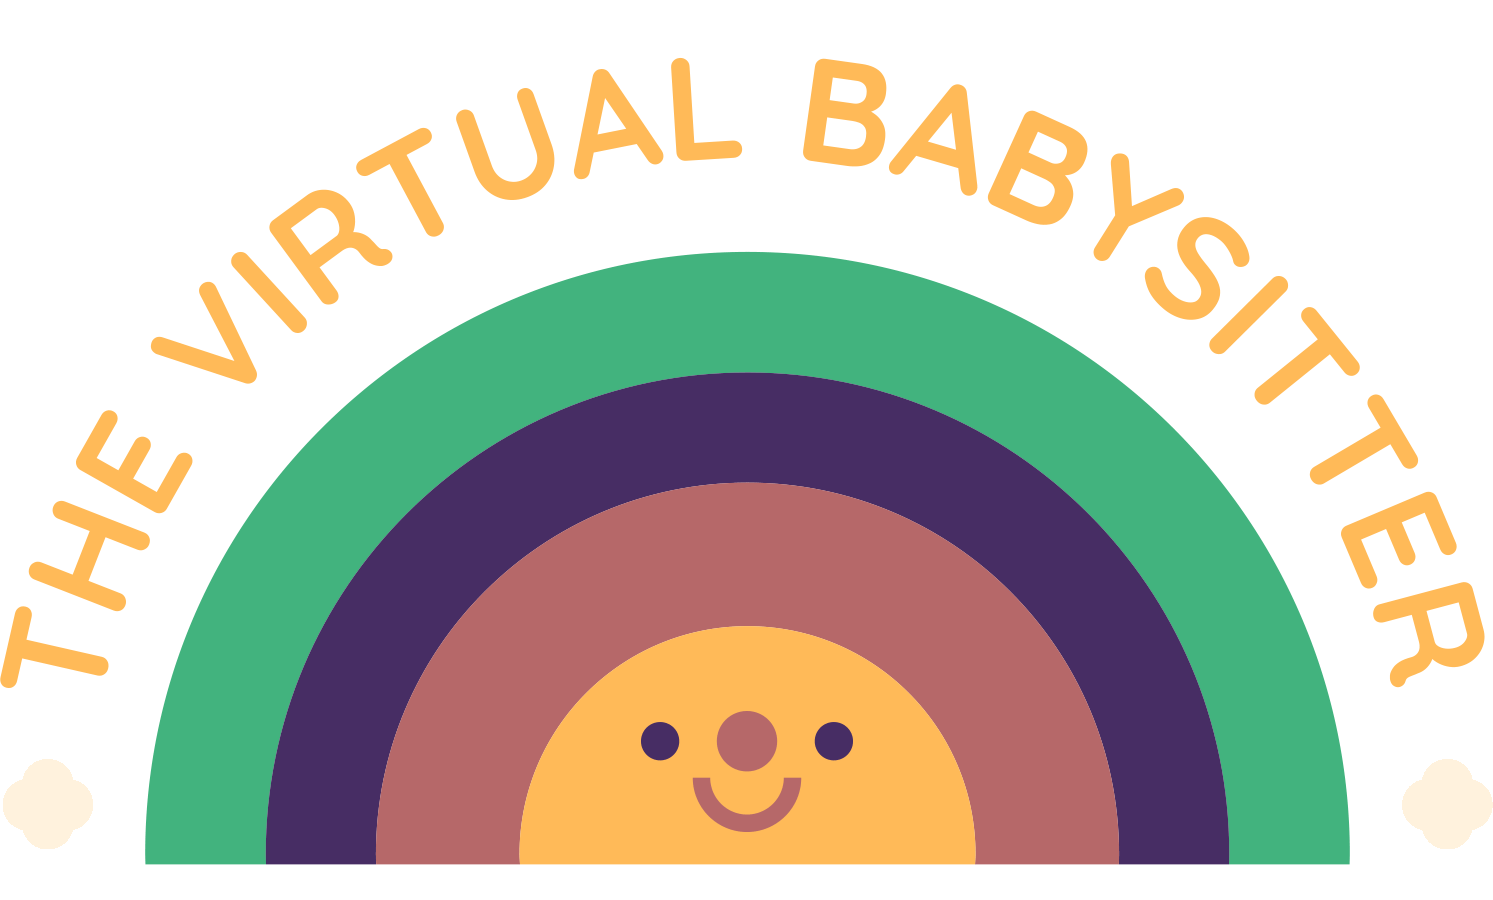 The Virtual Babysitter